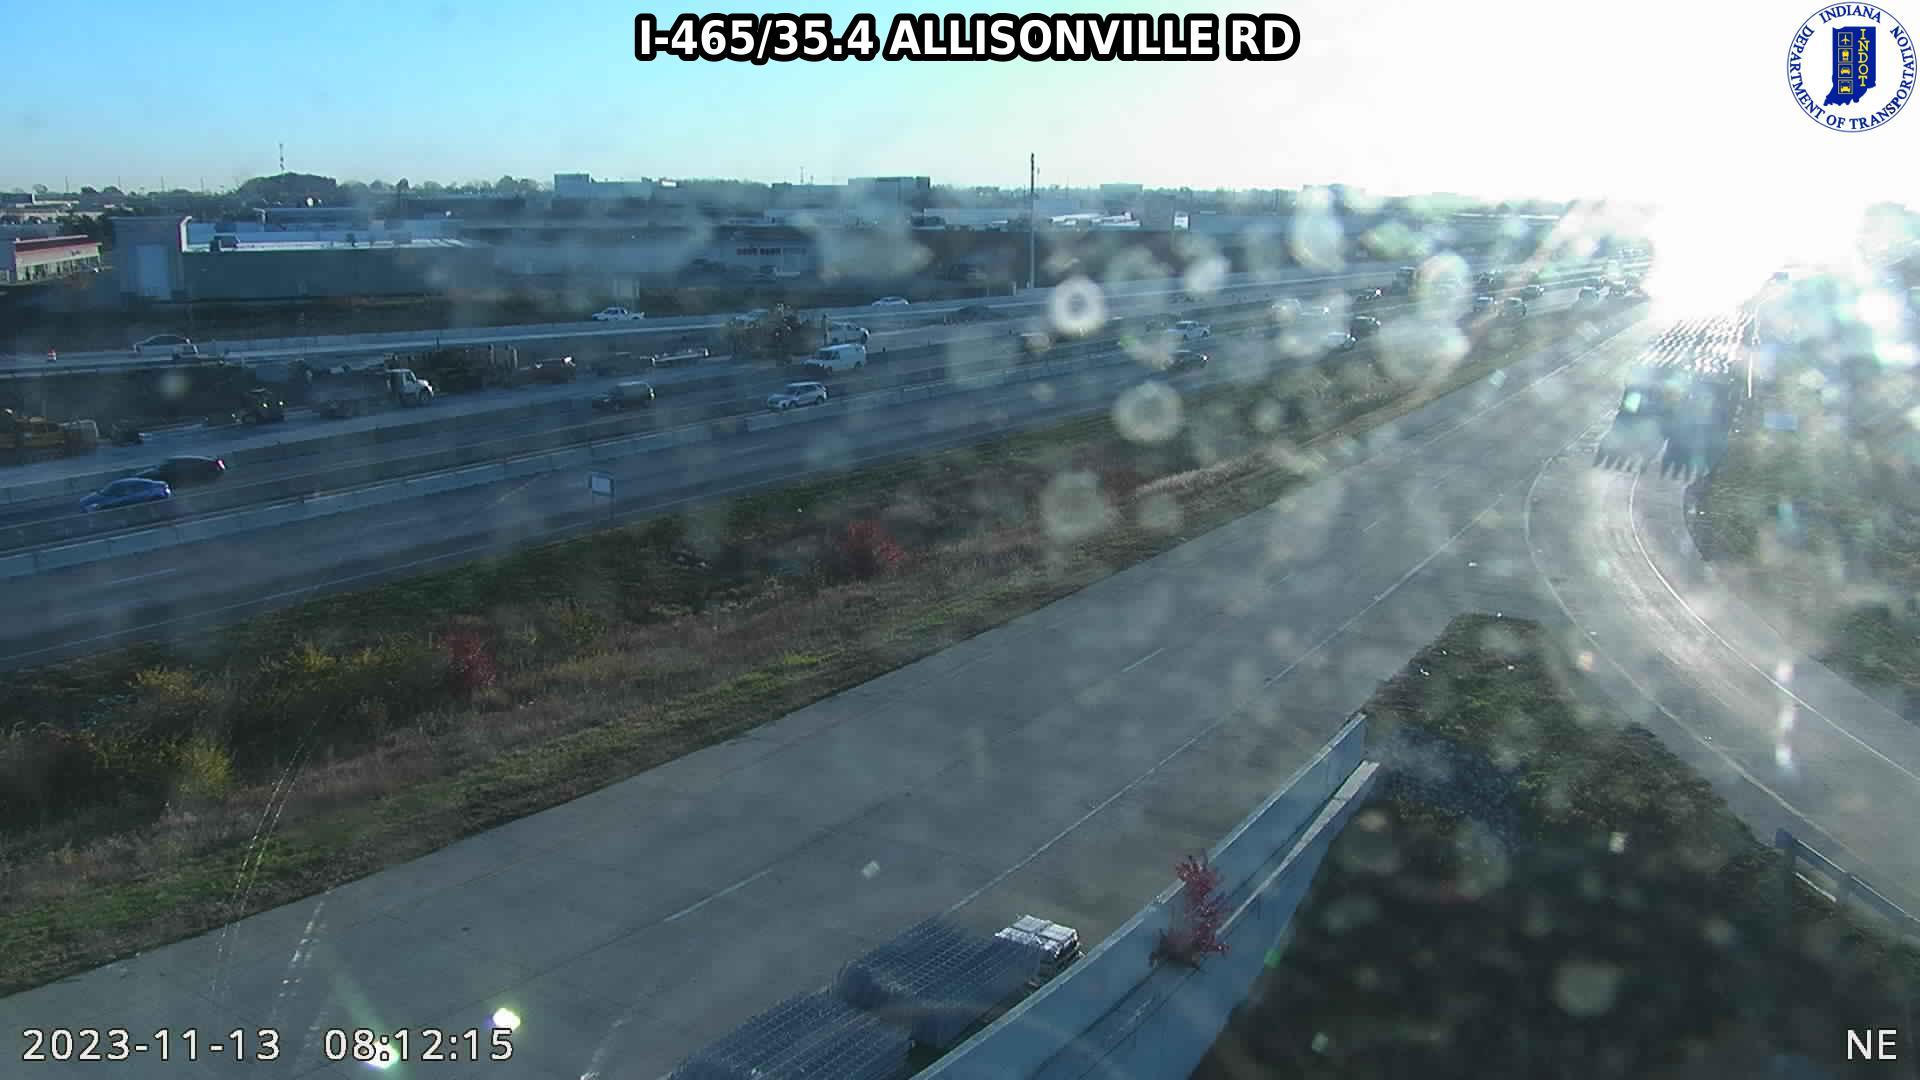 Allisonville: I-465: I-465/35.4 - RD Traffic Camera